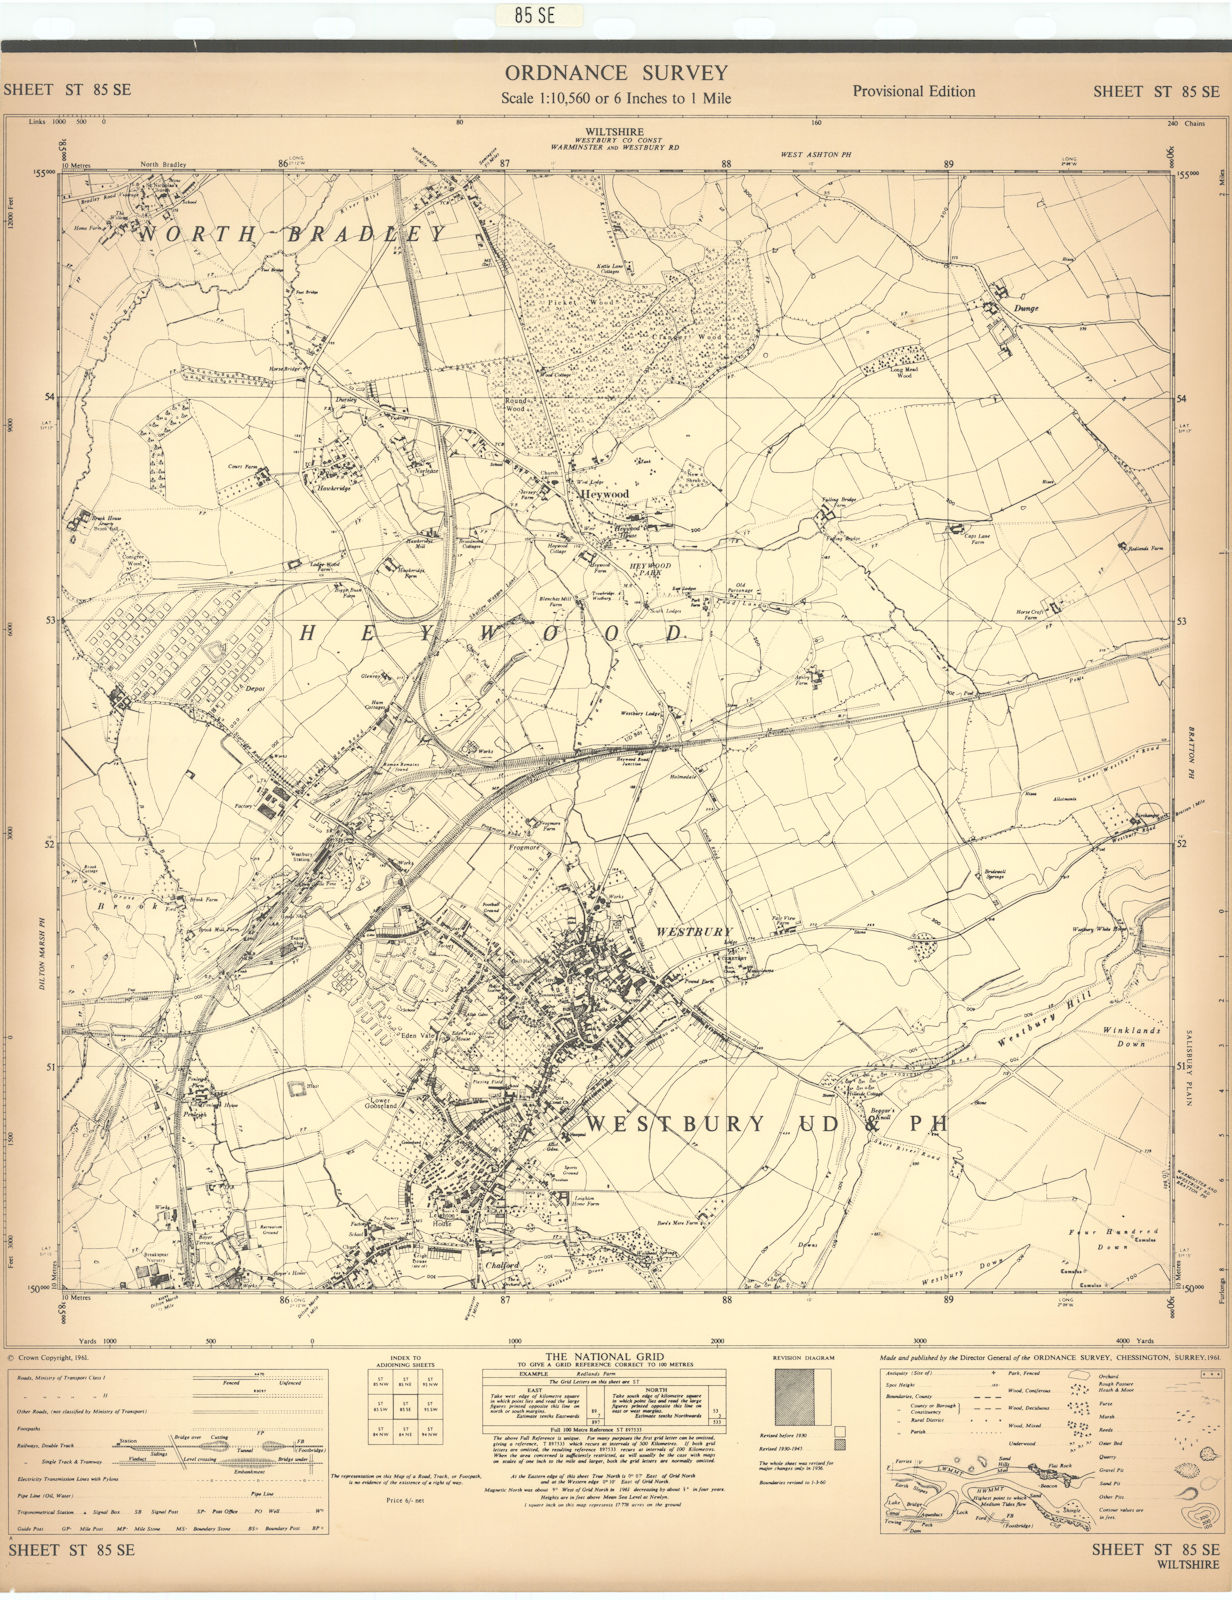 Ordnance Survey Sheet ST85SE Wiltshire Westbury Heywood 1961 old vintage map